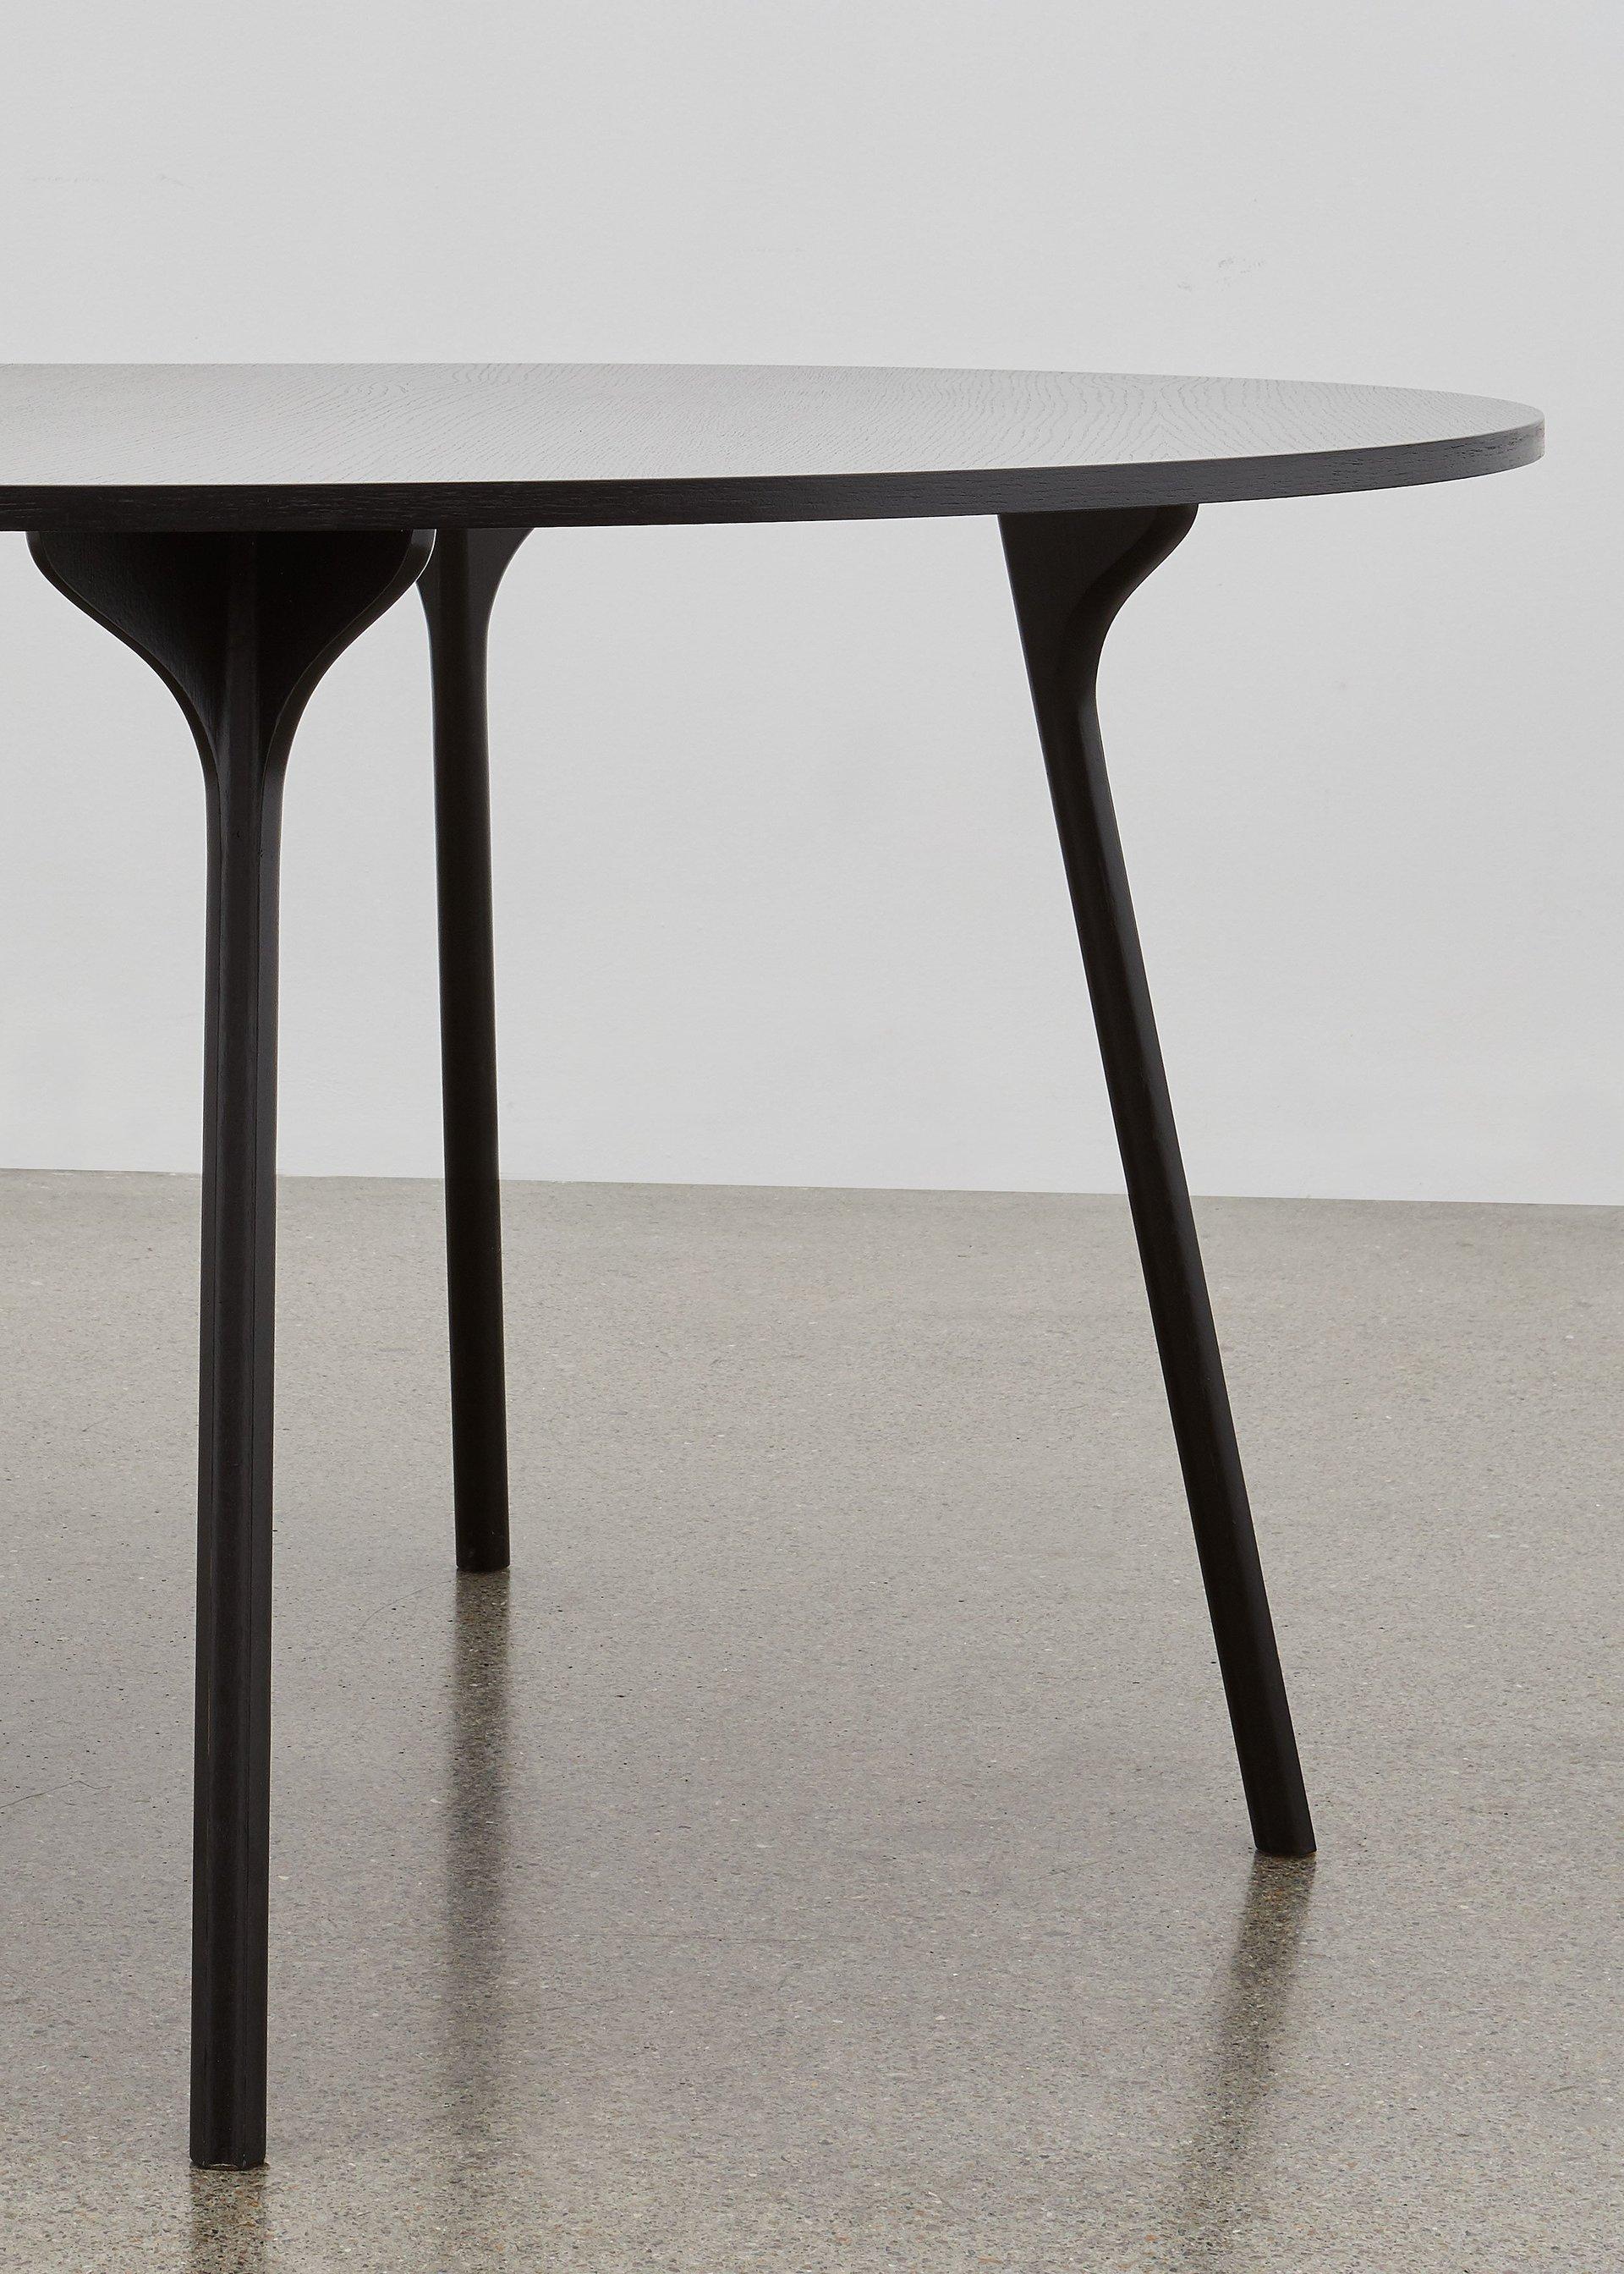 Bauhaus PH Circle Table, Black Oak Wood Legs, Veneer Table Plate and Edge For Sale